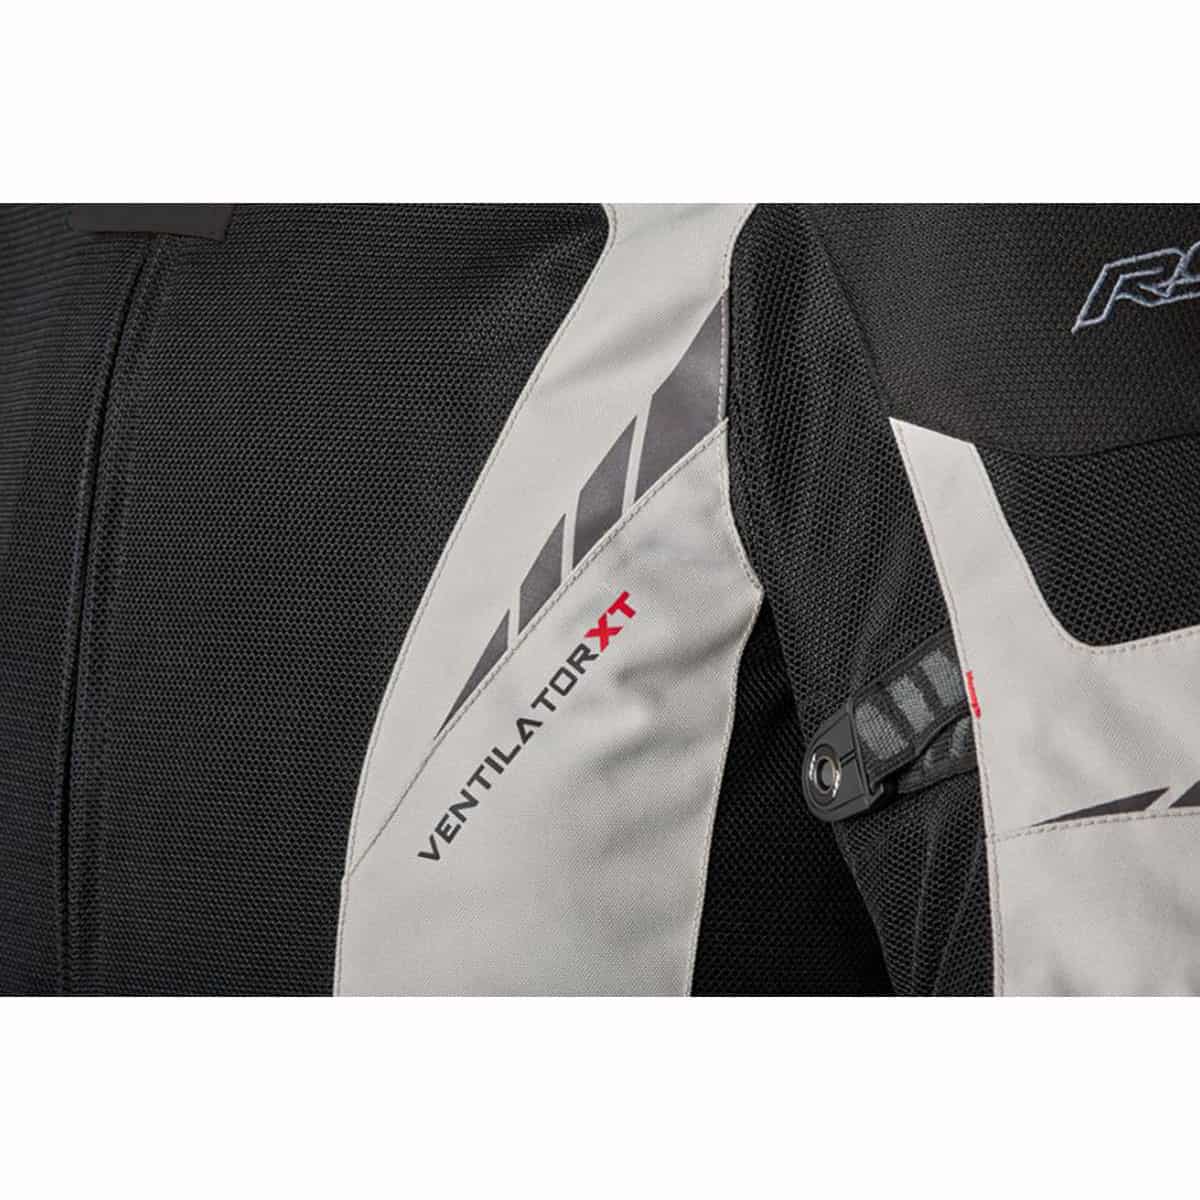 RST Pro Series Ventilator XT mesh motorcycle jacket silver close up